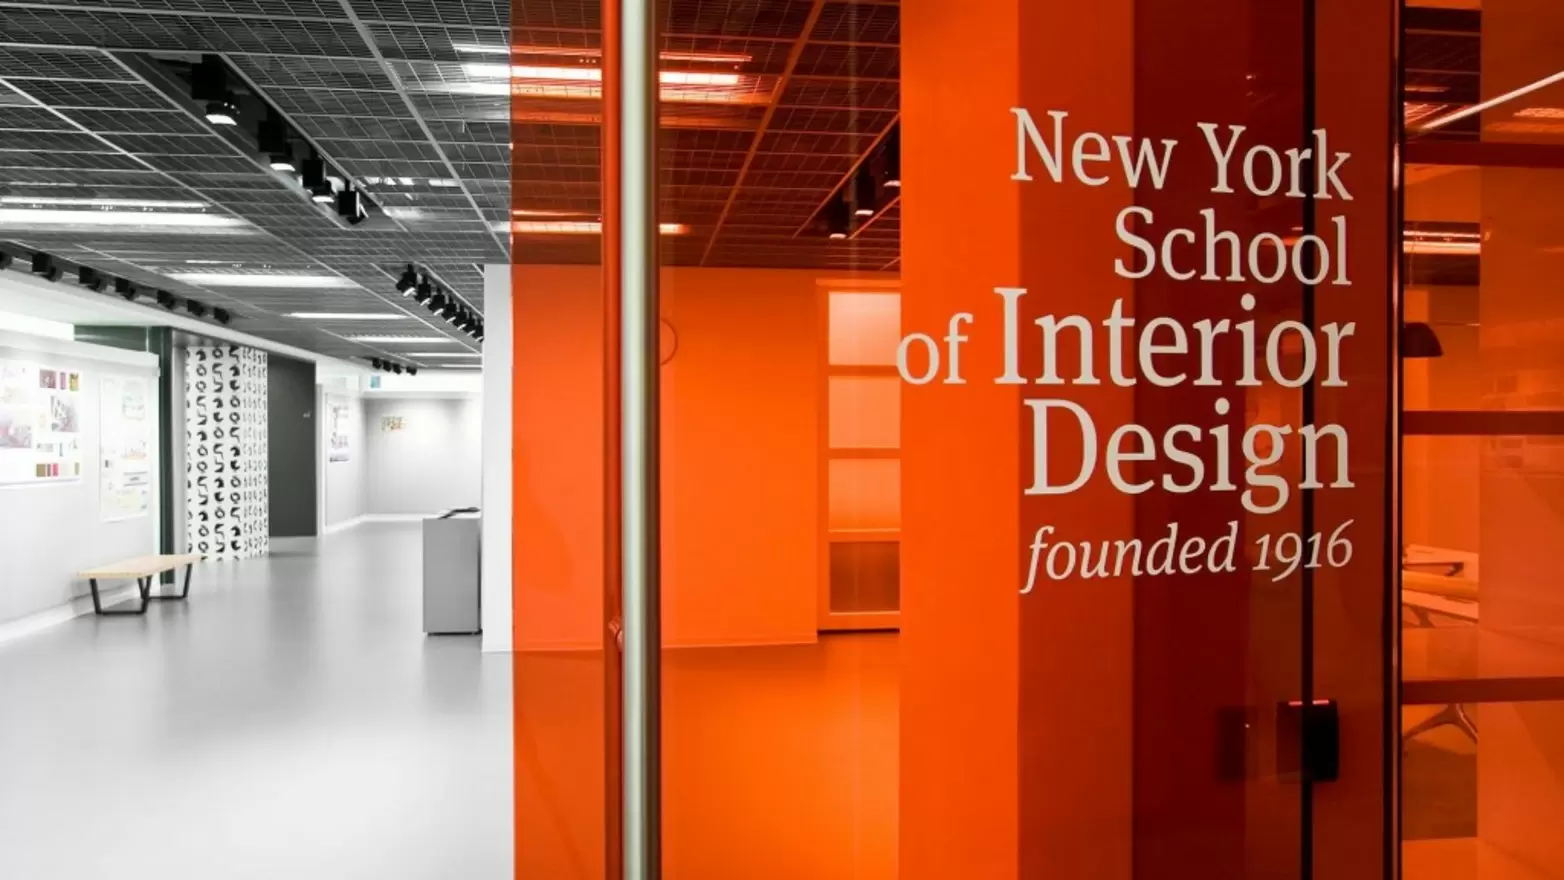 New York School of Interior Design.jpg